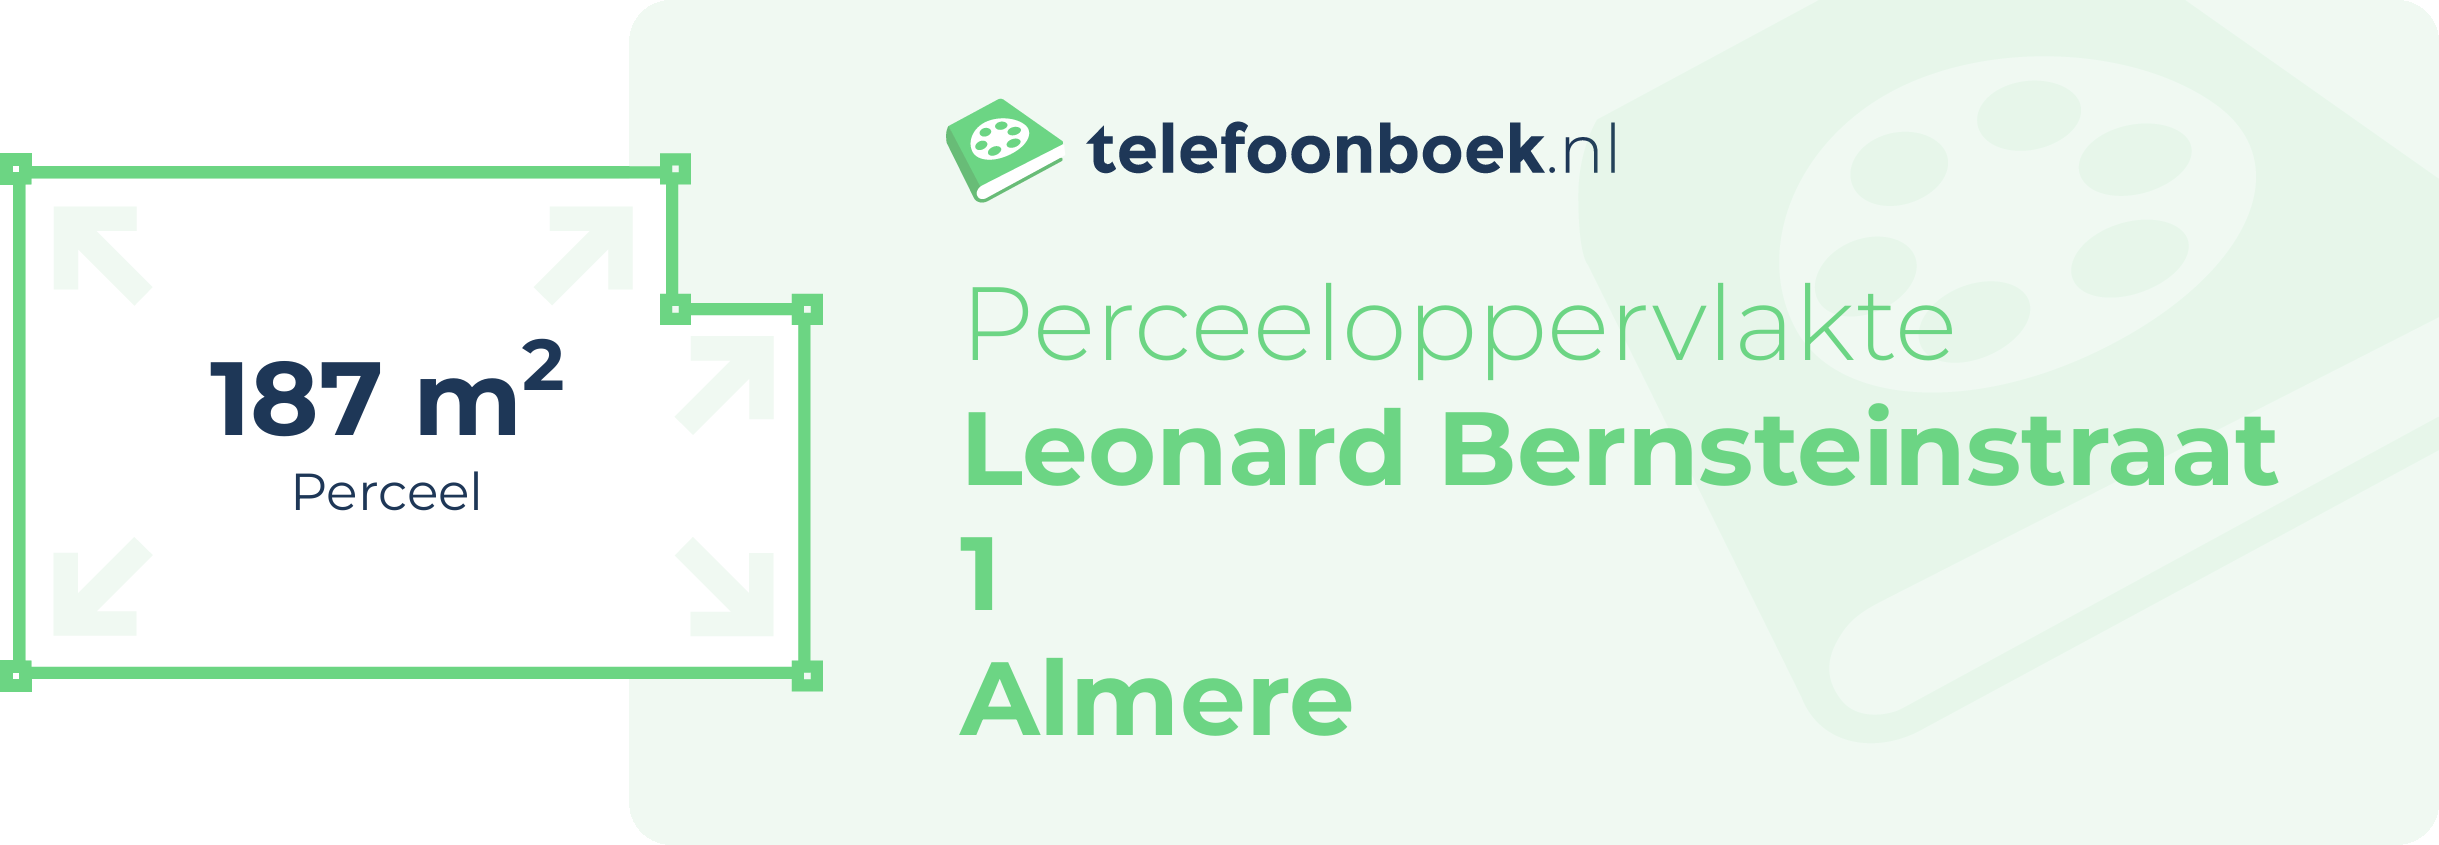 Perceeloppervlakte Leonard Bernsteinstraat 1 Almere